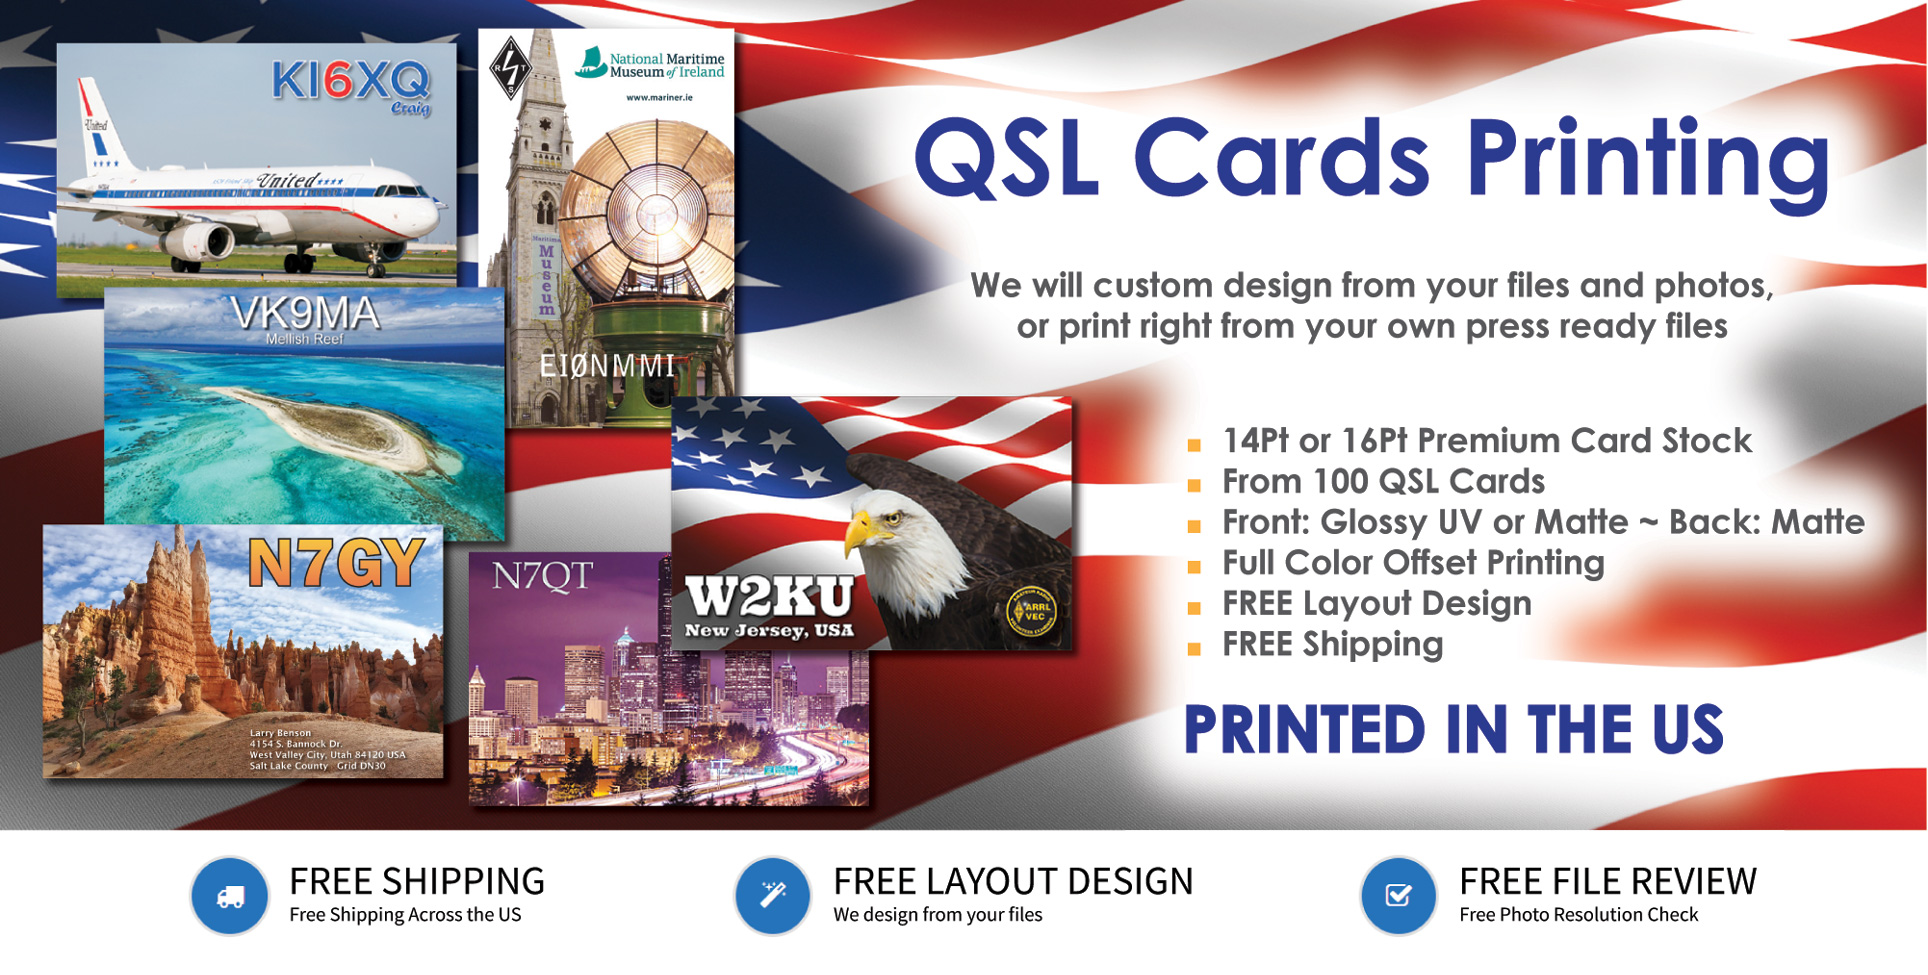 qsl-concept-usa-qsl-cards-printing